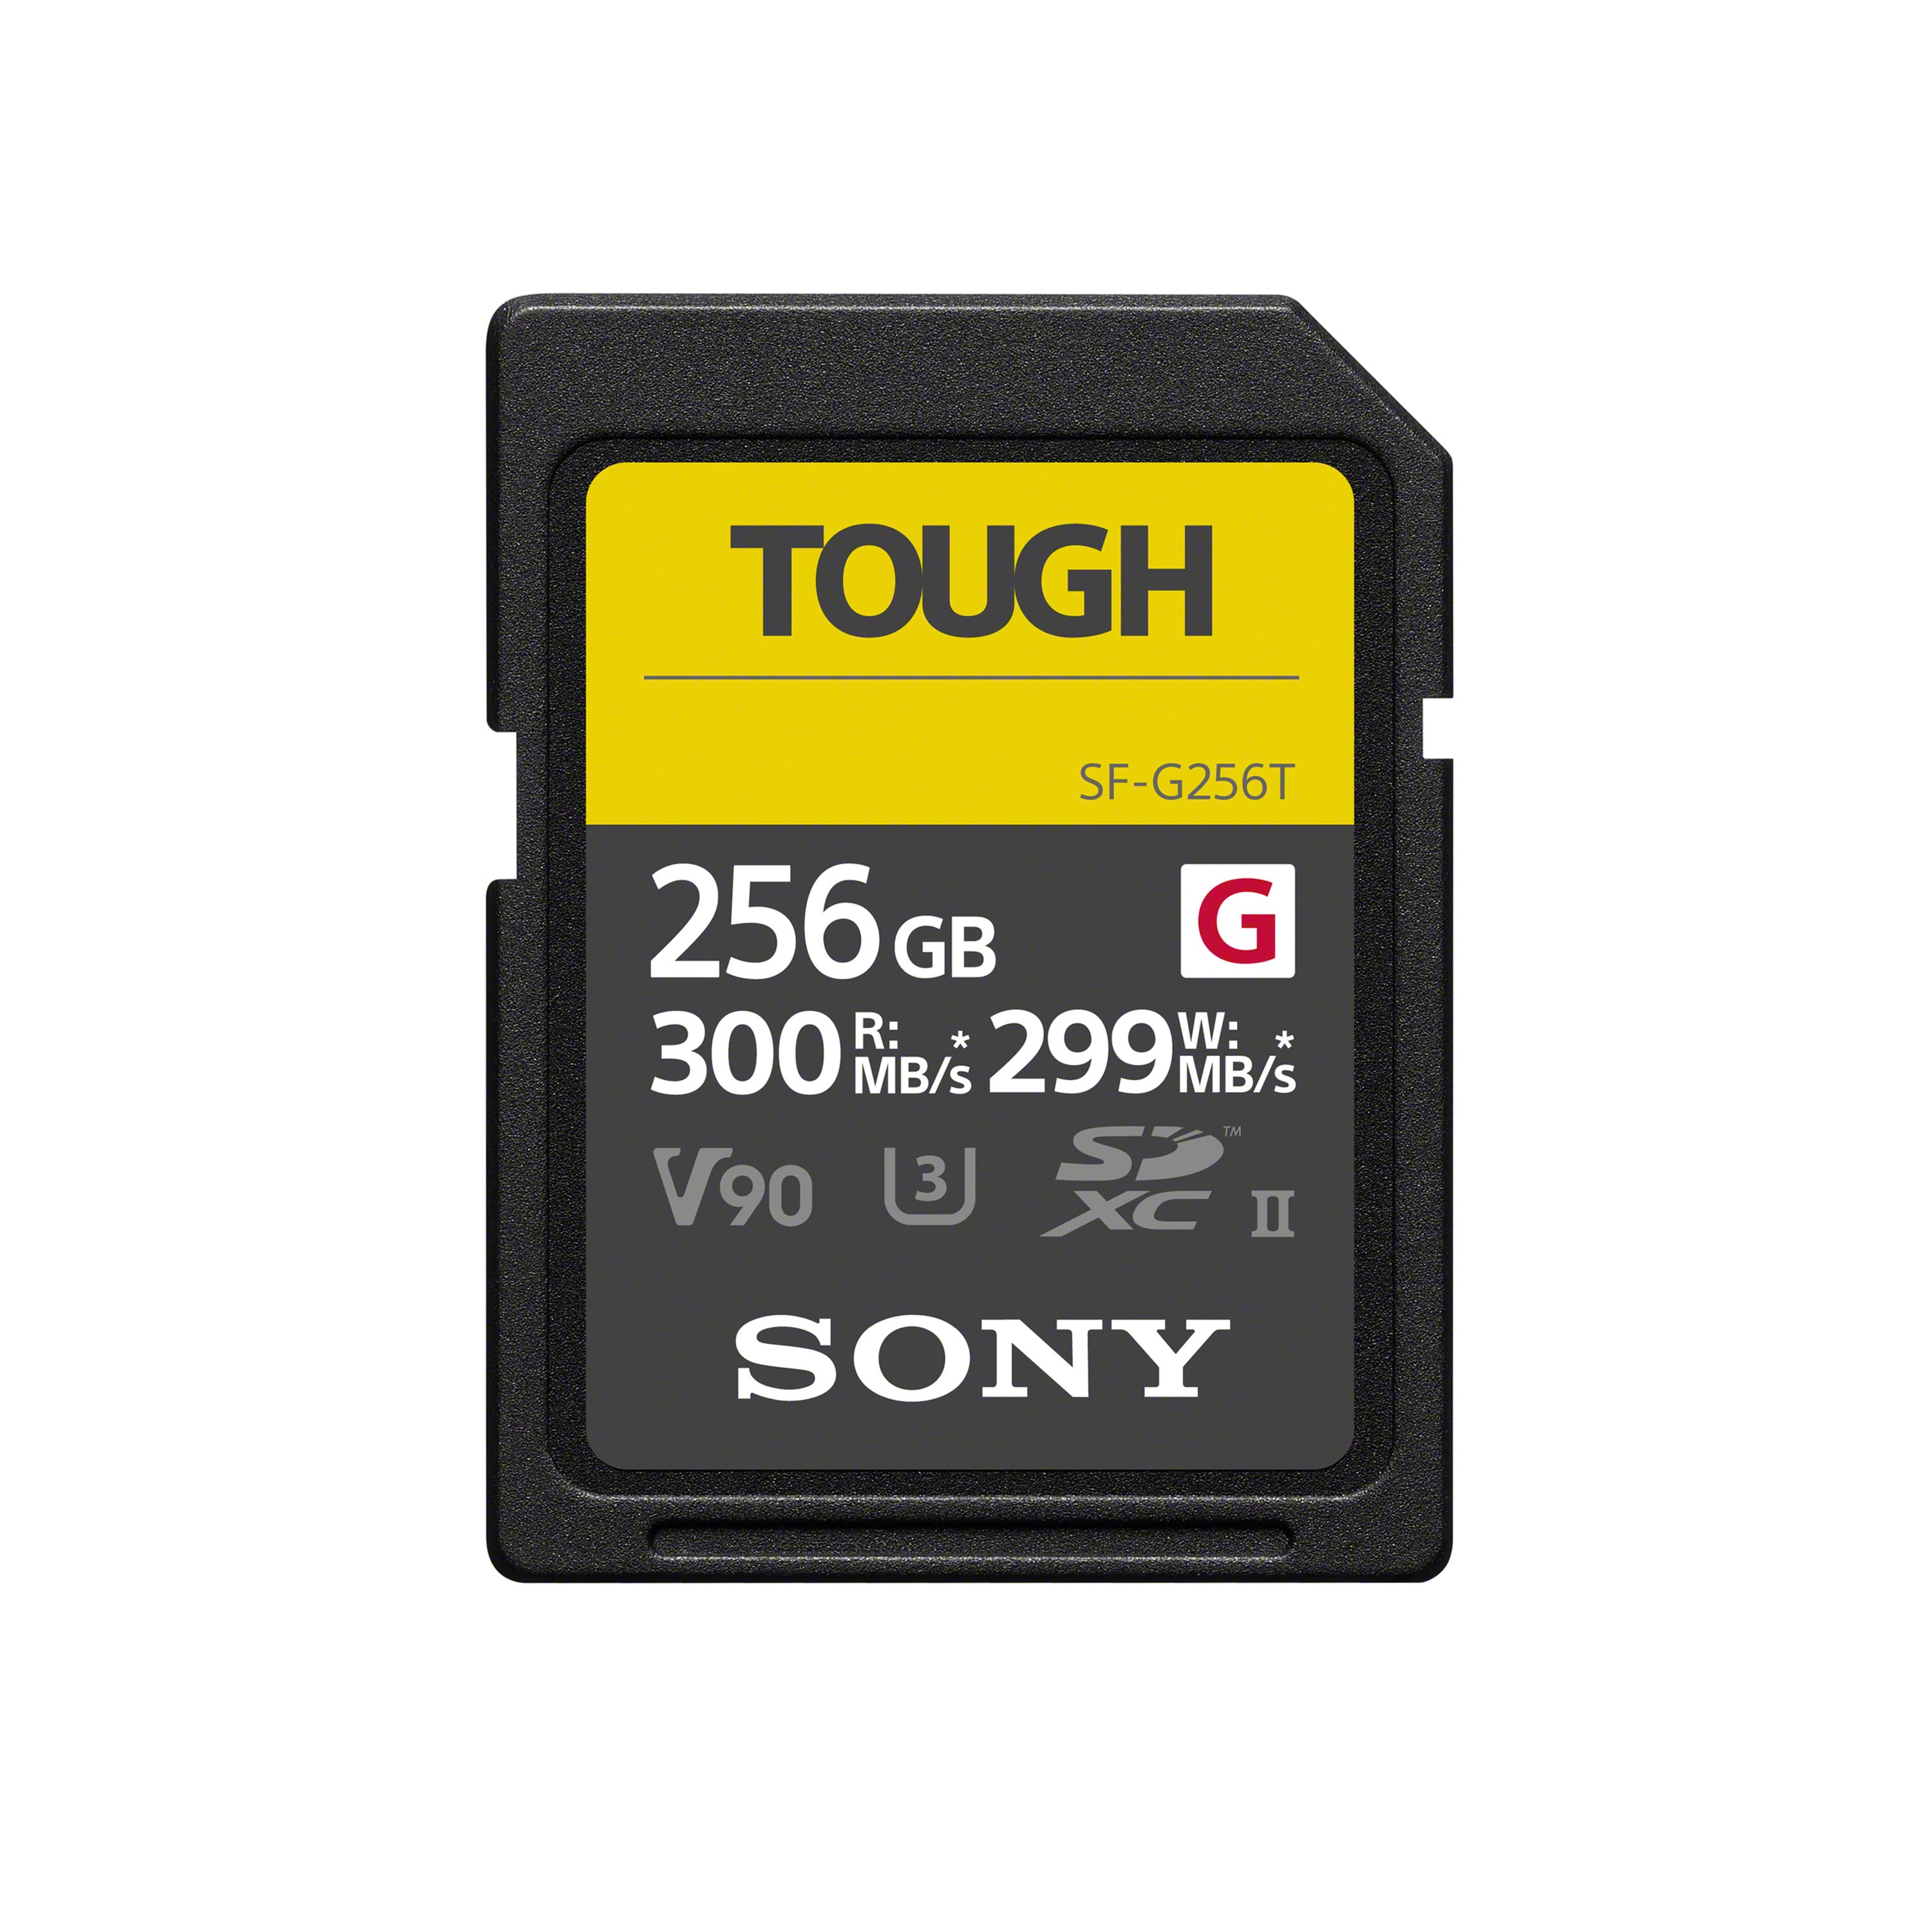 Sony TOUGH G Series UHS-II SDXC Memory Card